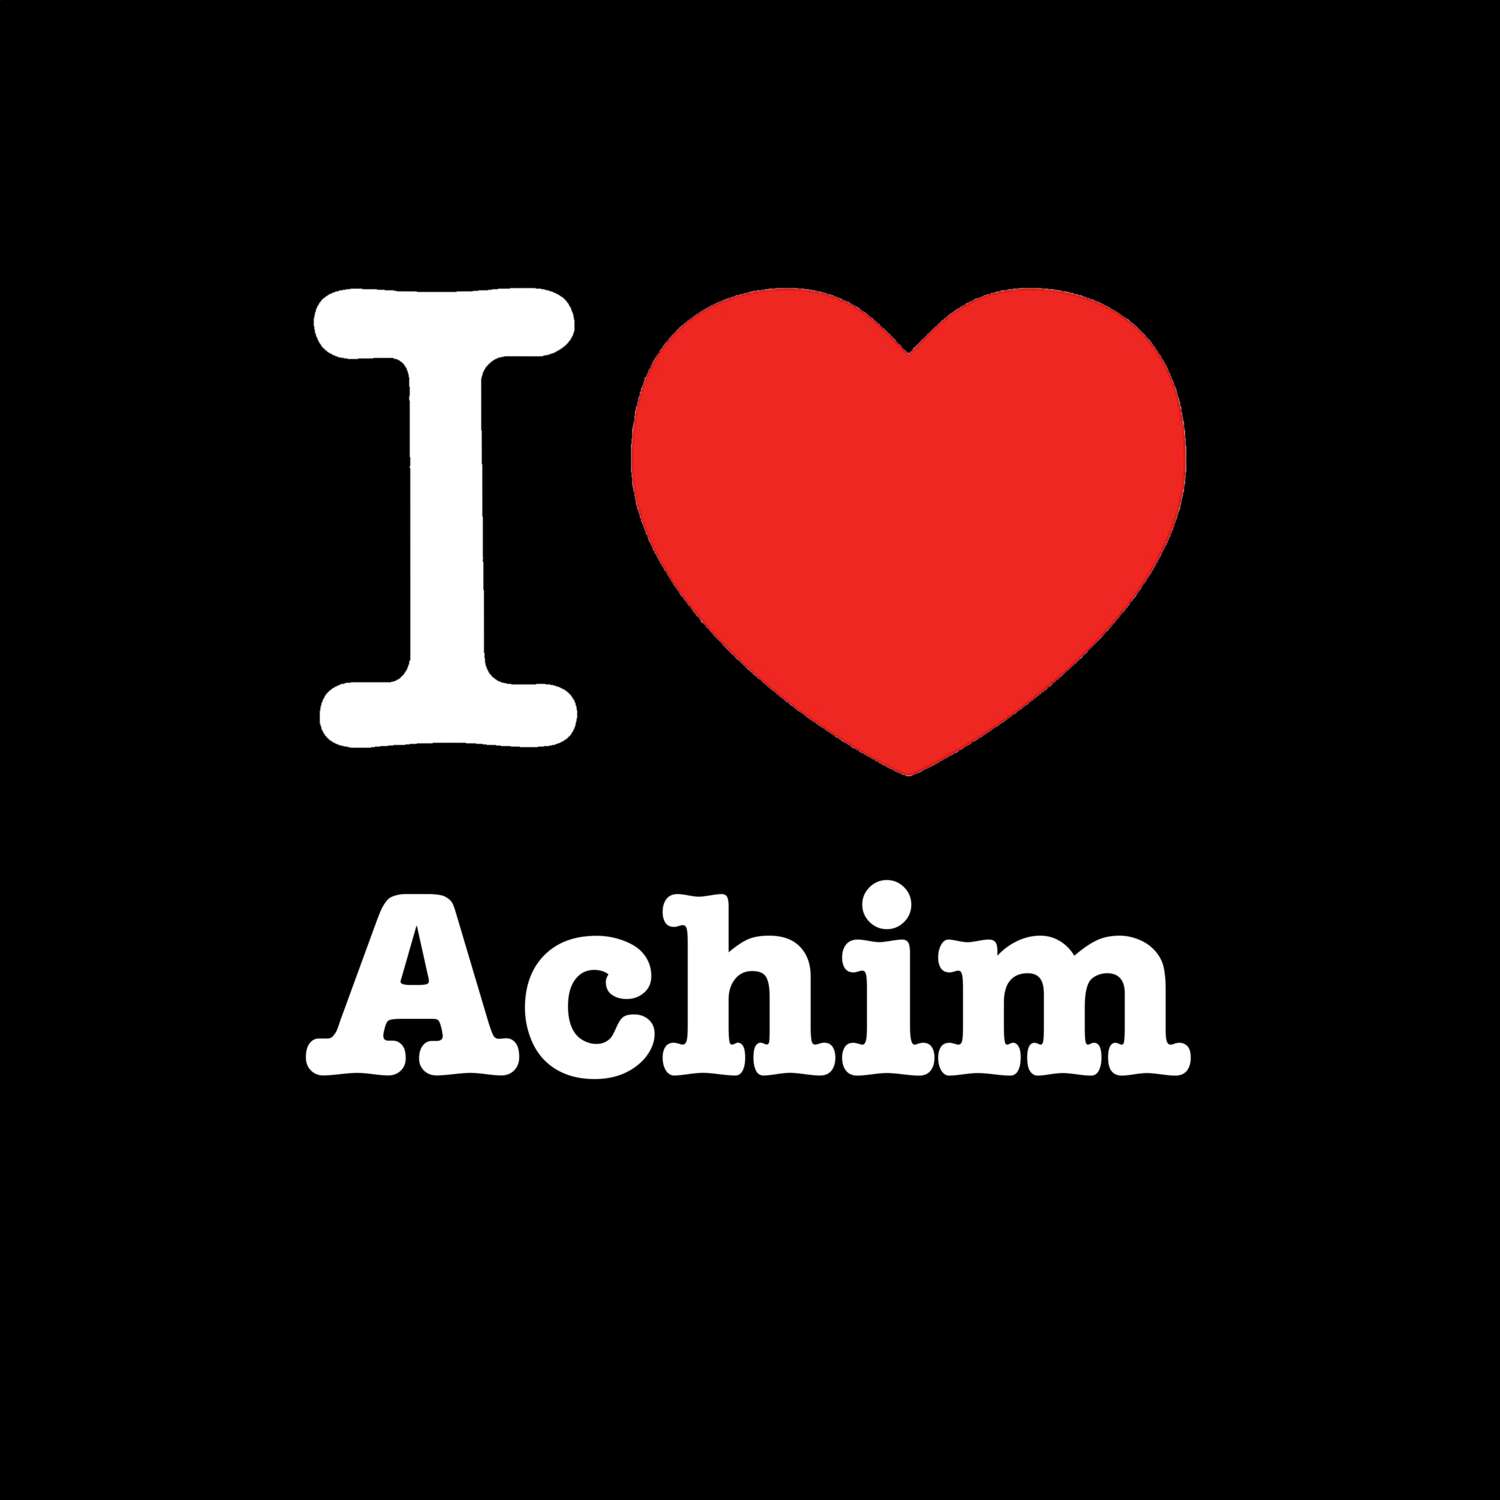 Achim T-Shirt »I love«